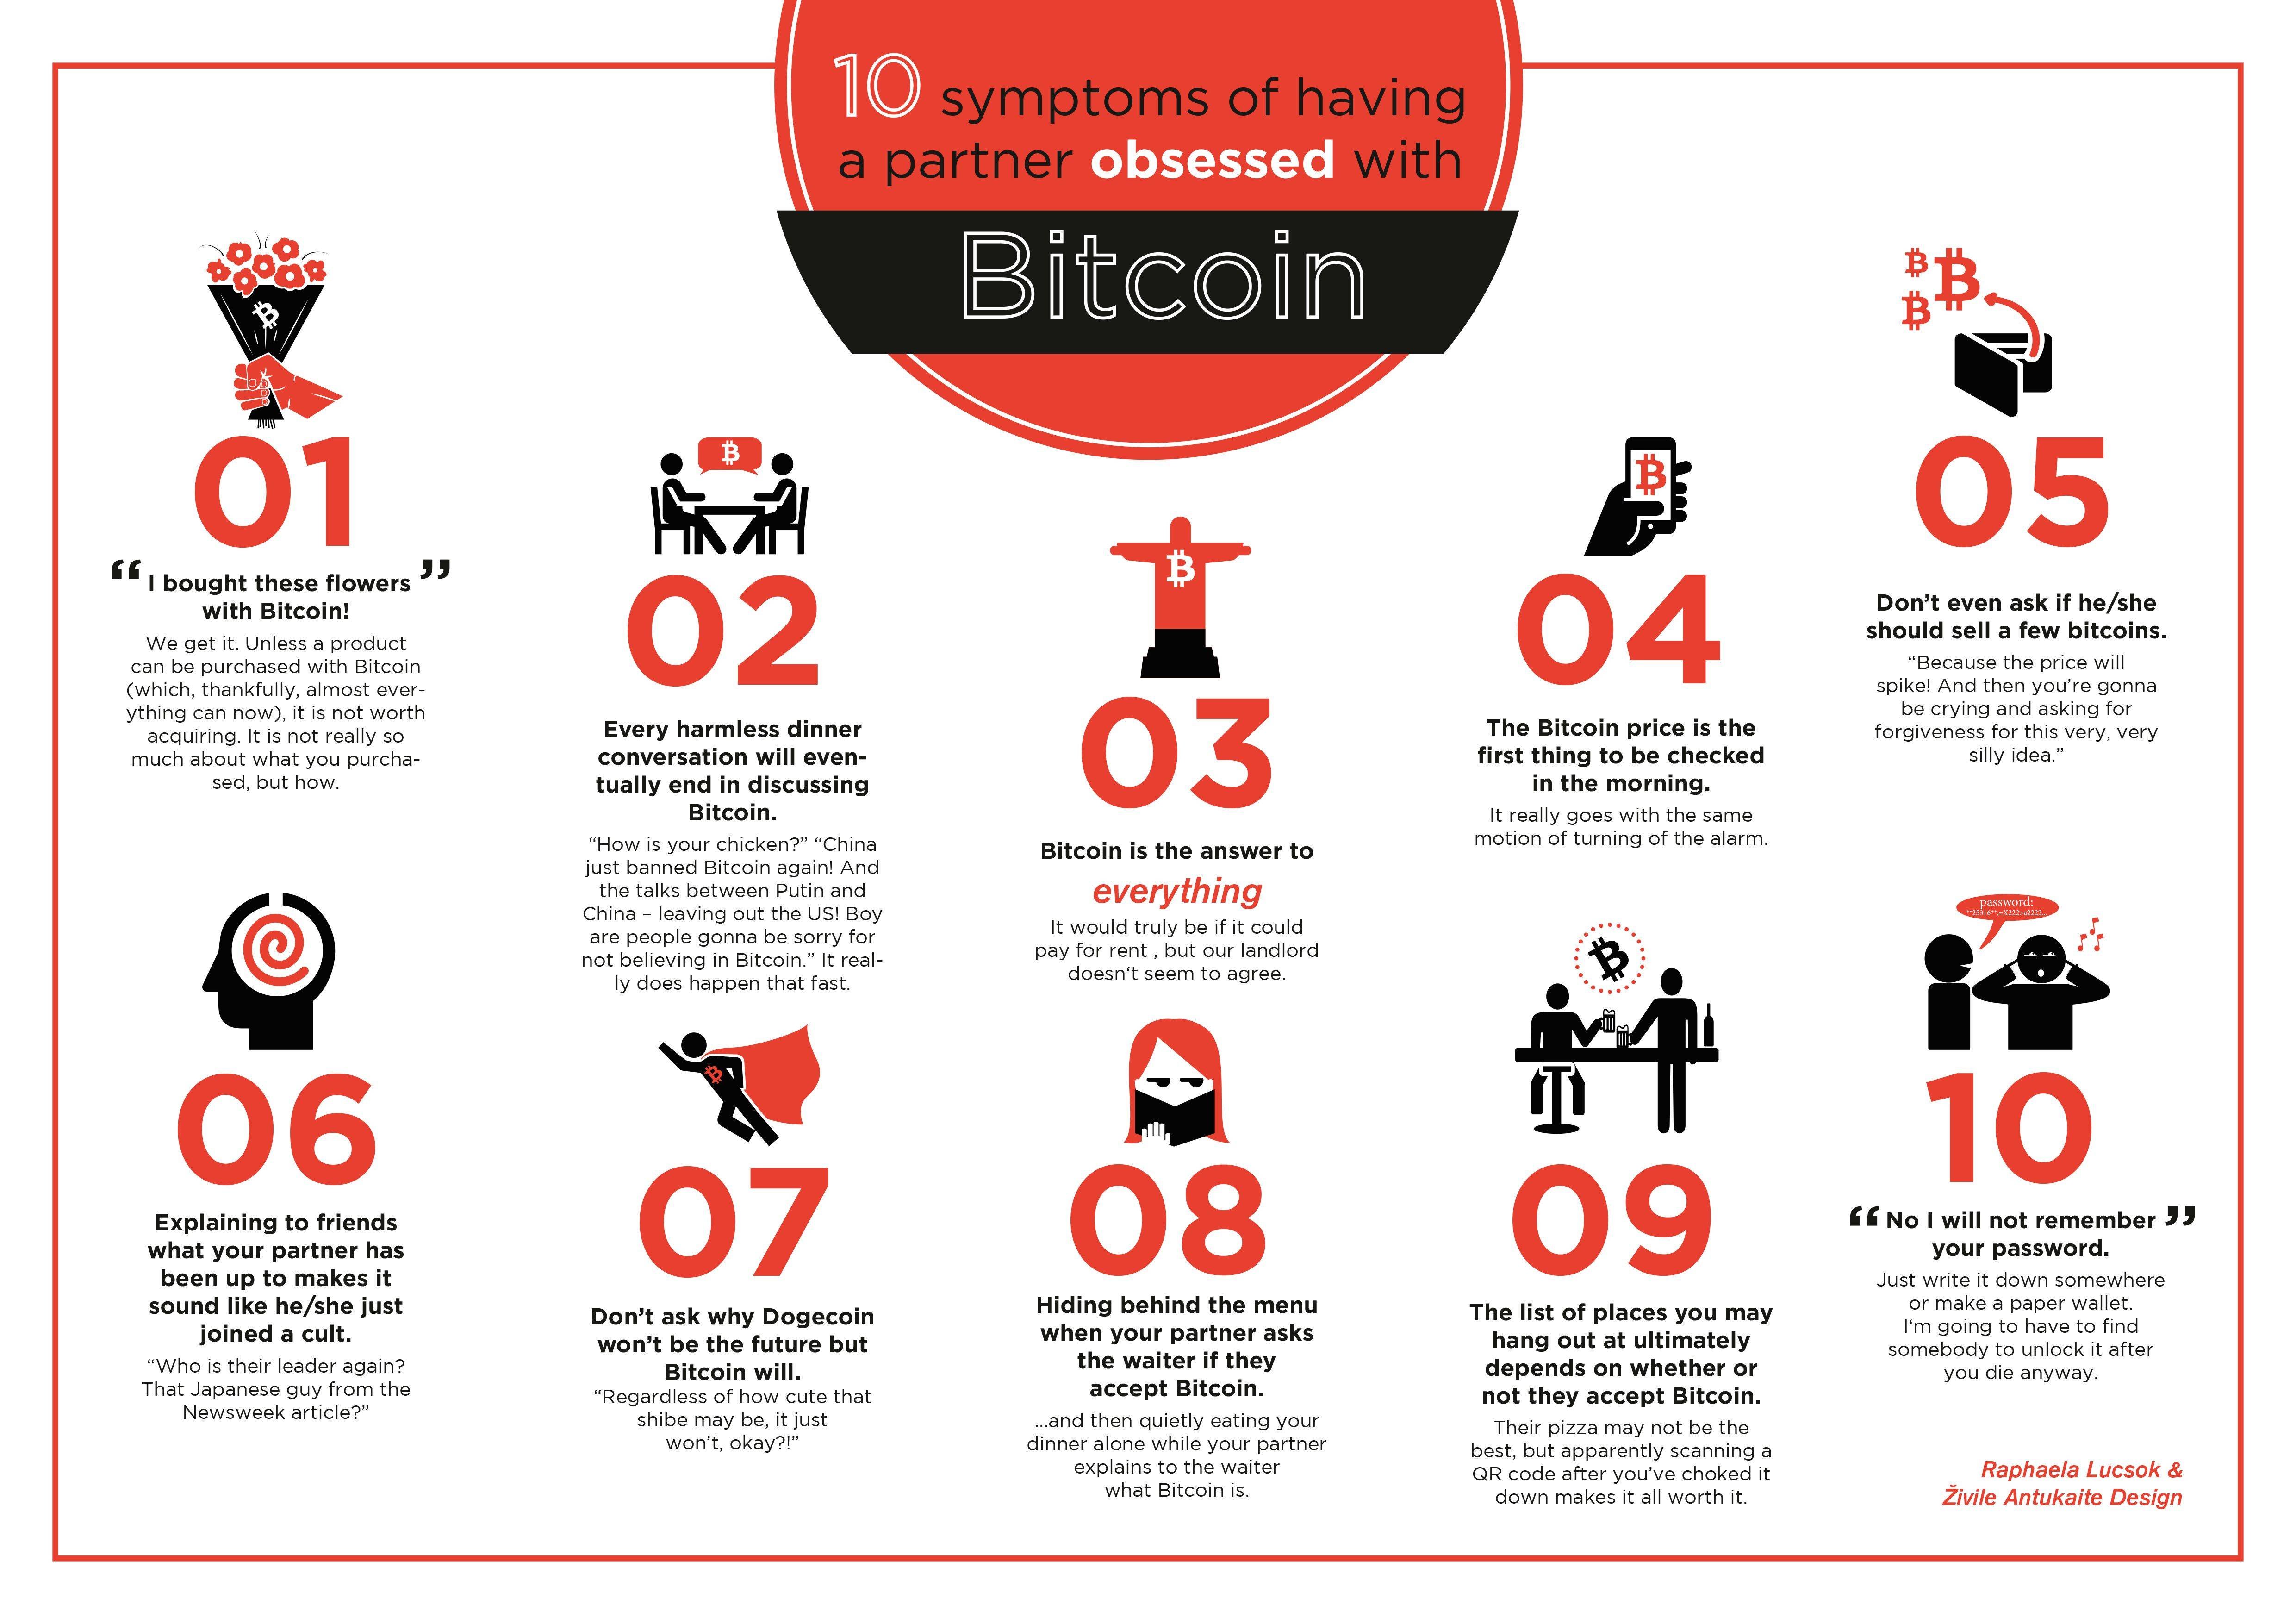 bitcoin, Computer, Internet, Money, Coins, Poster Wallpaper